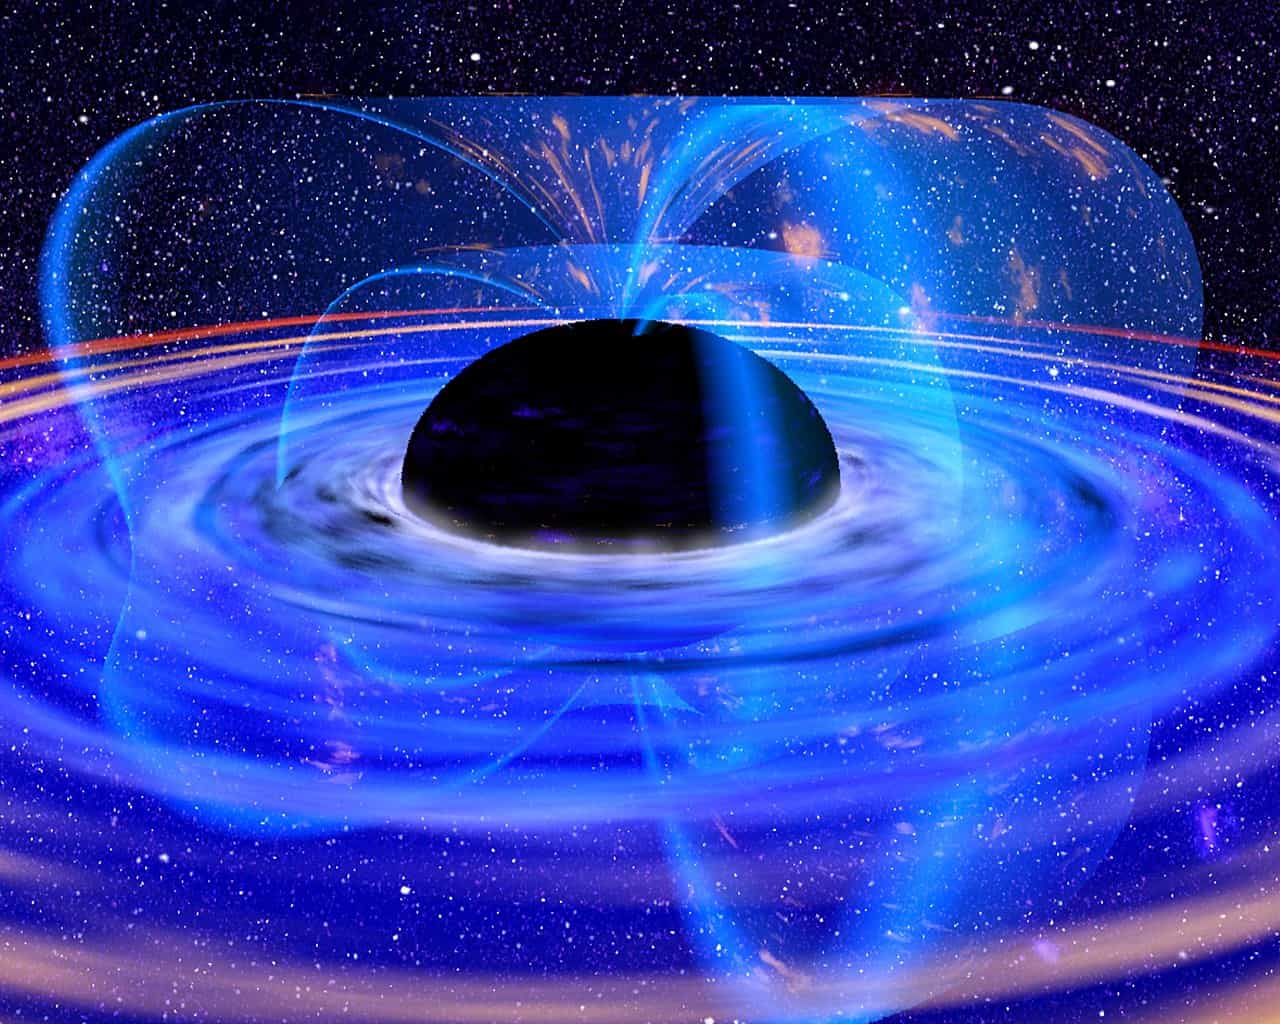 px-BlackholeNASA - If You Travel Through A Black Hole, Where Do You Wind Up?